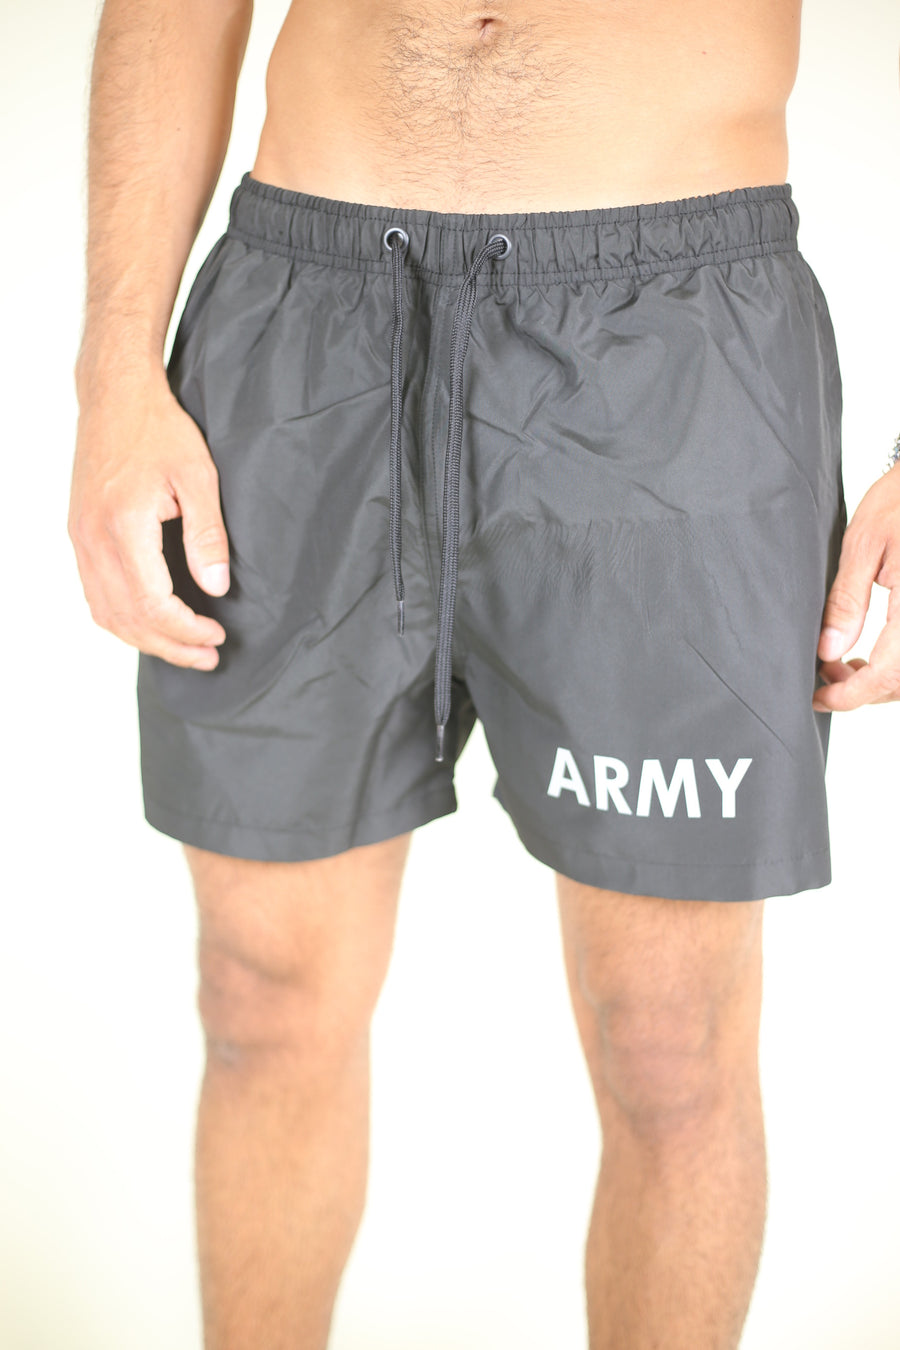 Costume Army